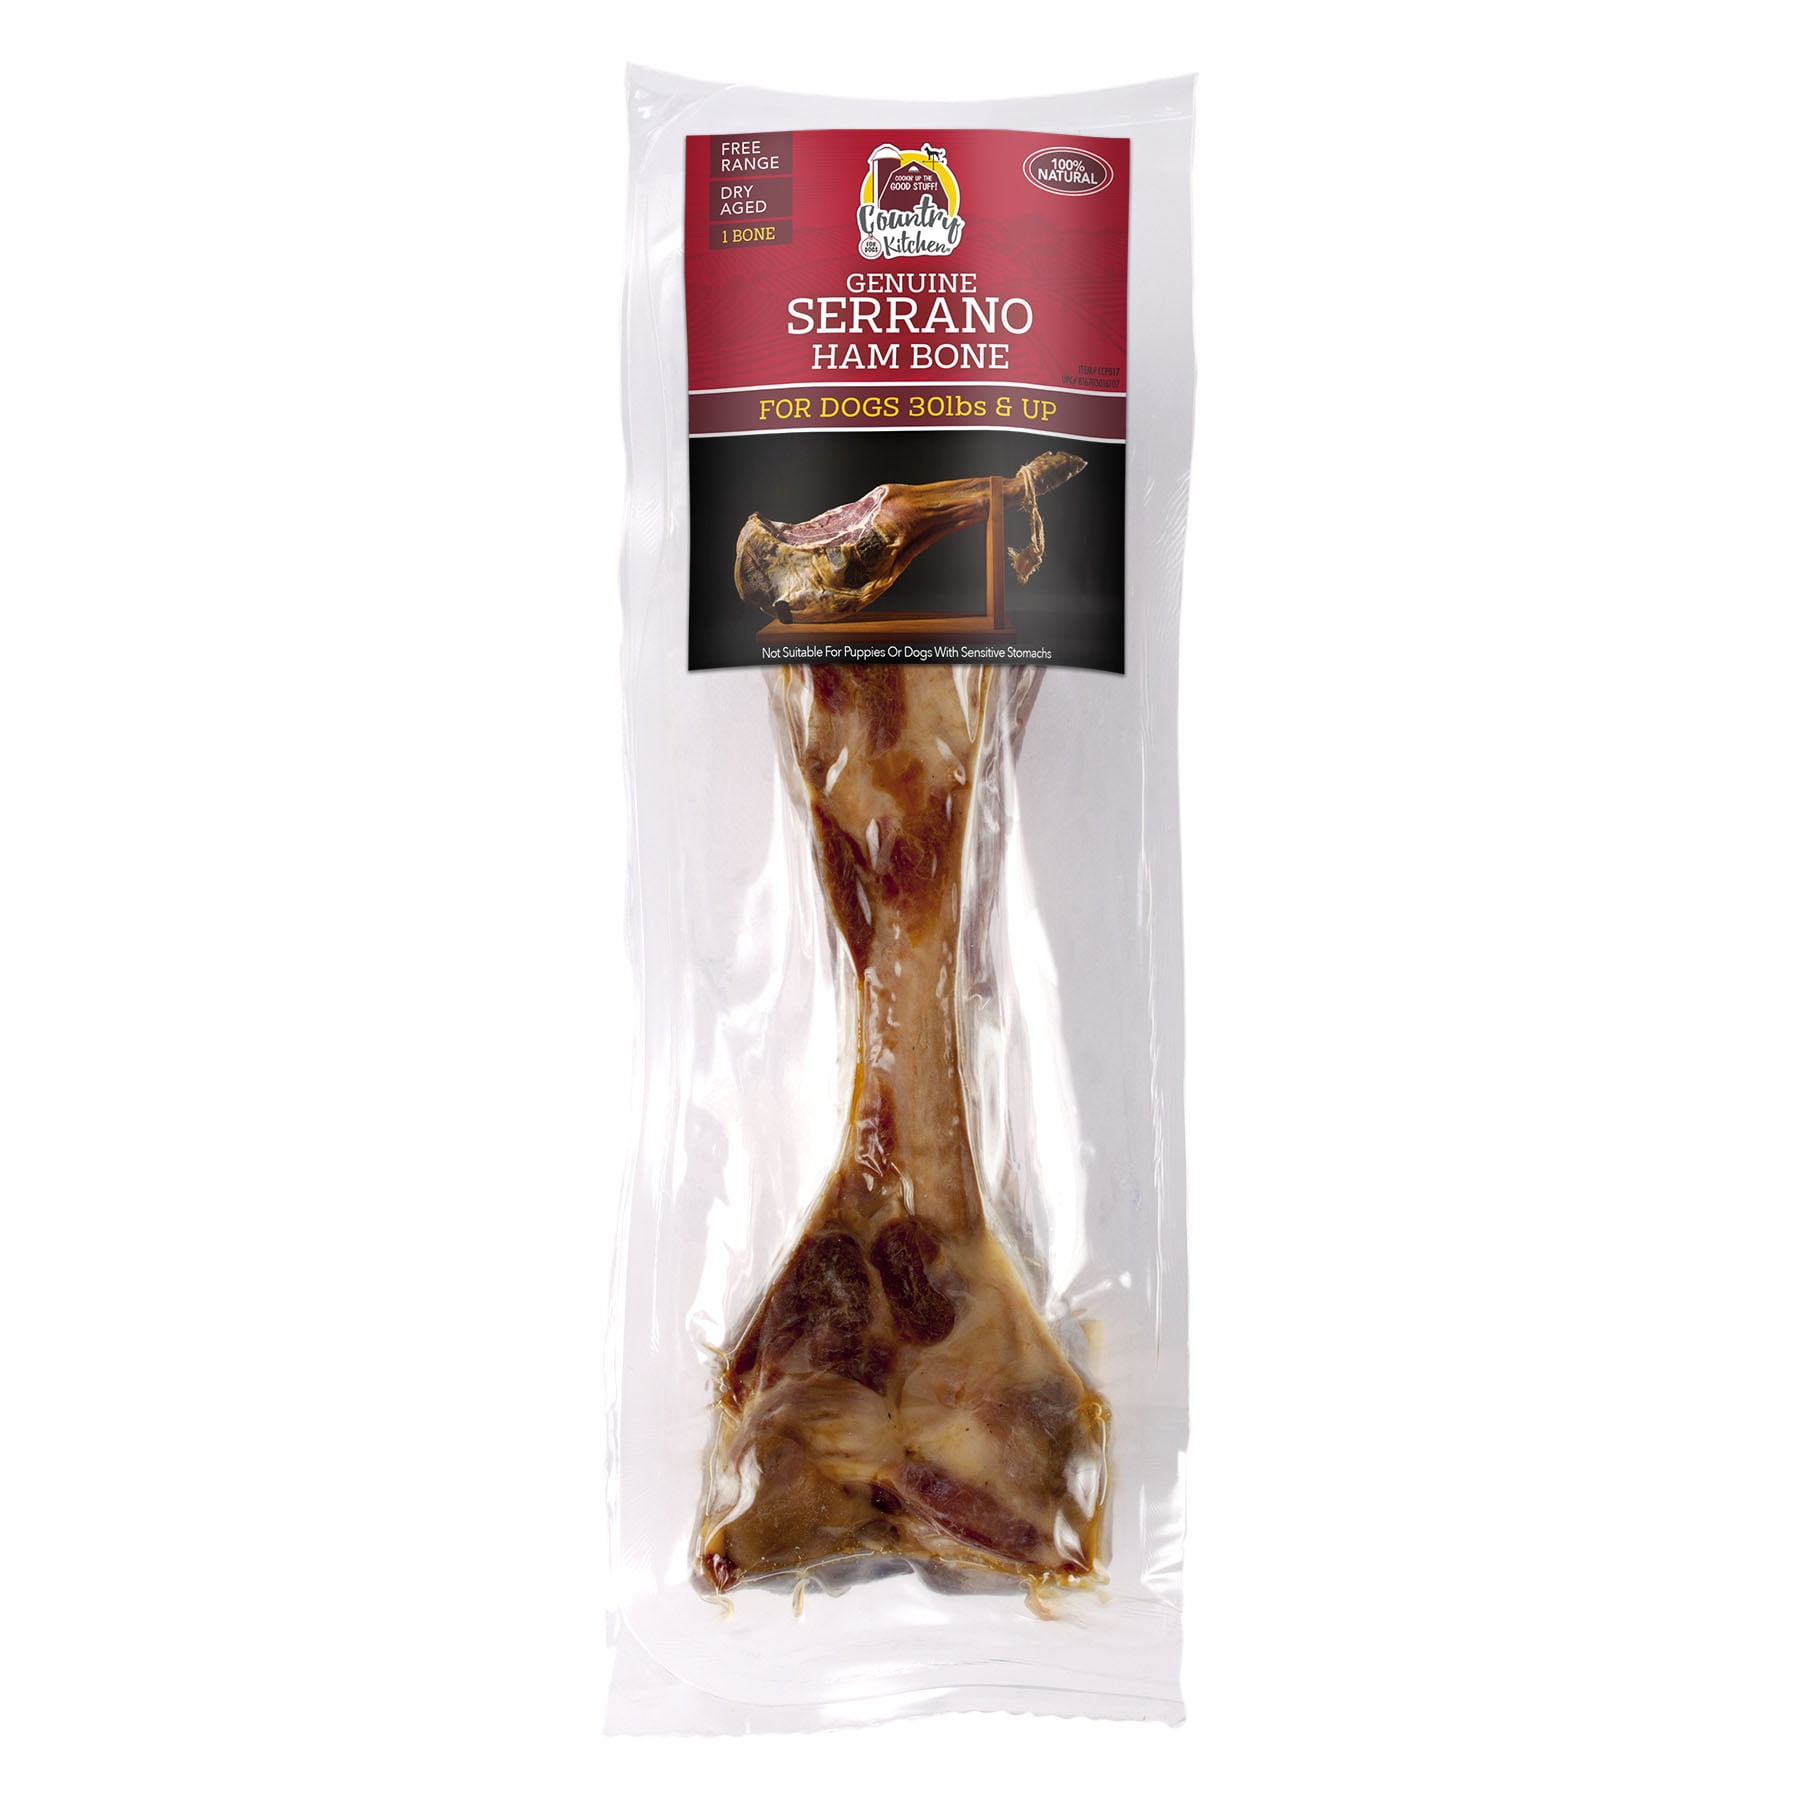 Country Kitchen 100% Natural Serrano Ham Bone Dog Treat, 1 pack aged dog bone